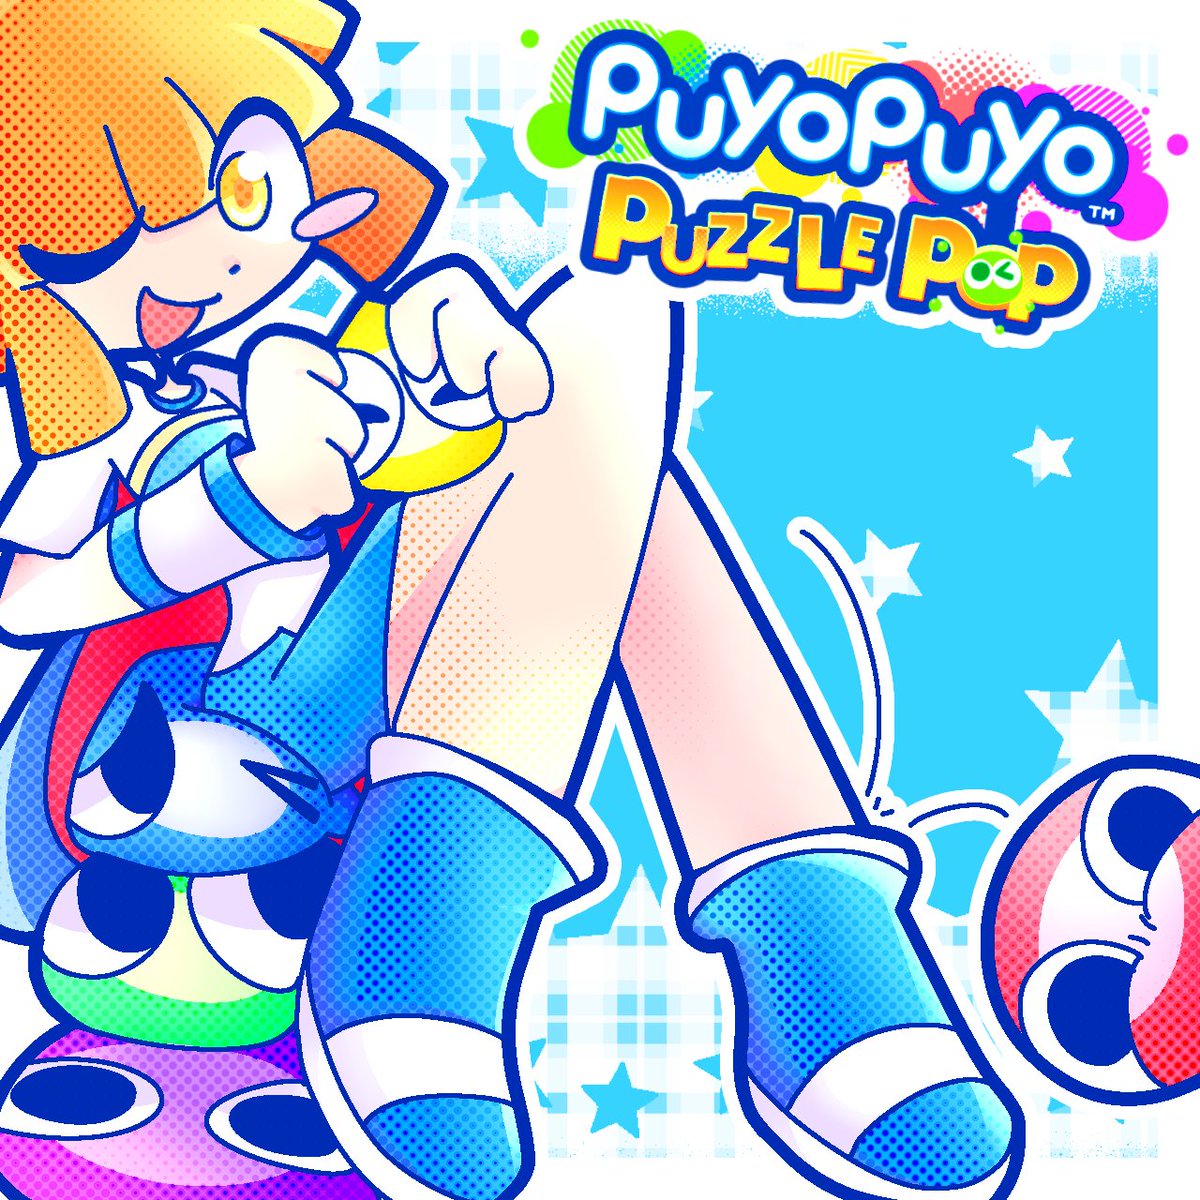 So there's a new puyo game huh #PuyoPuyo #ぷよぷよ